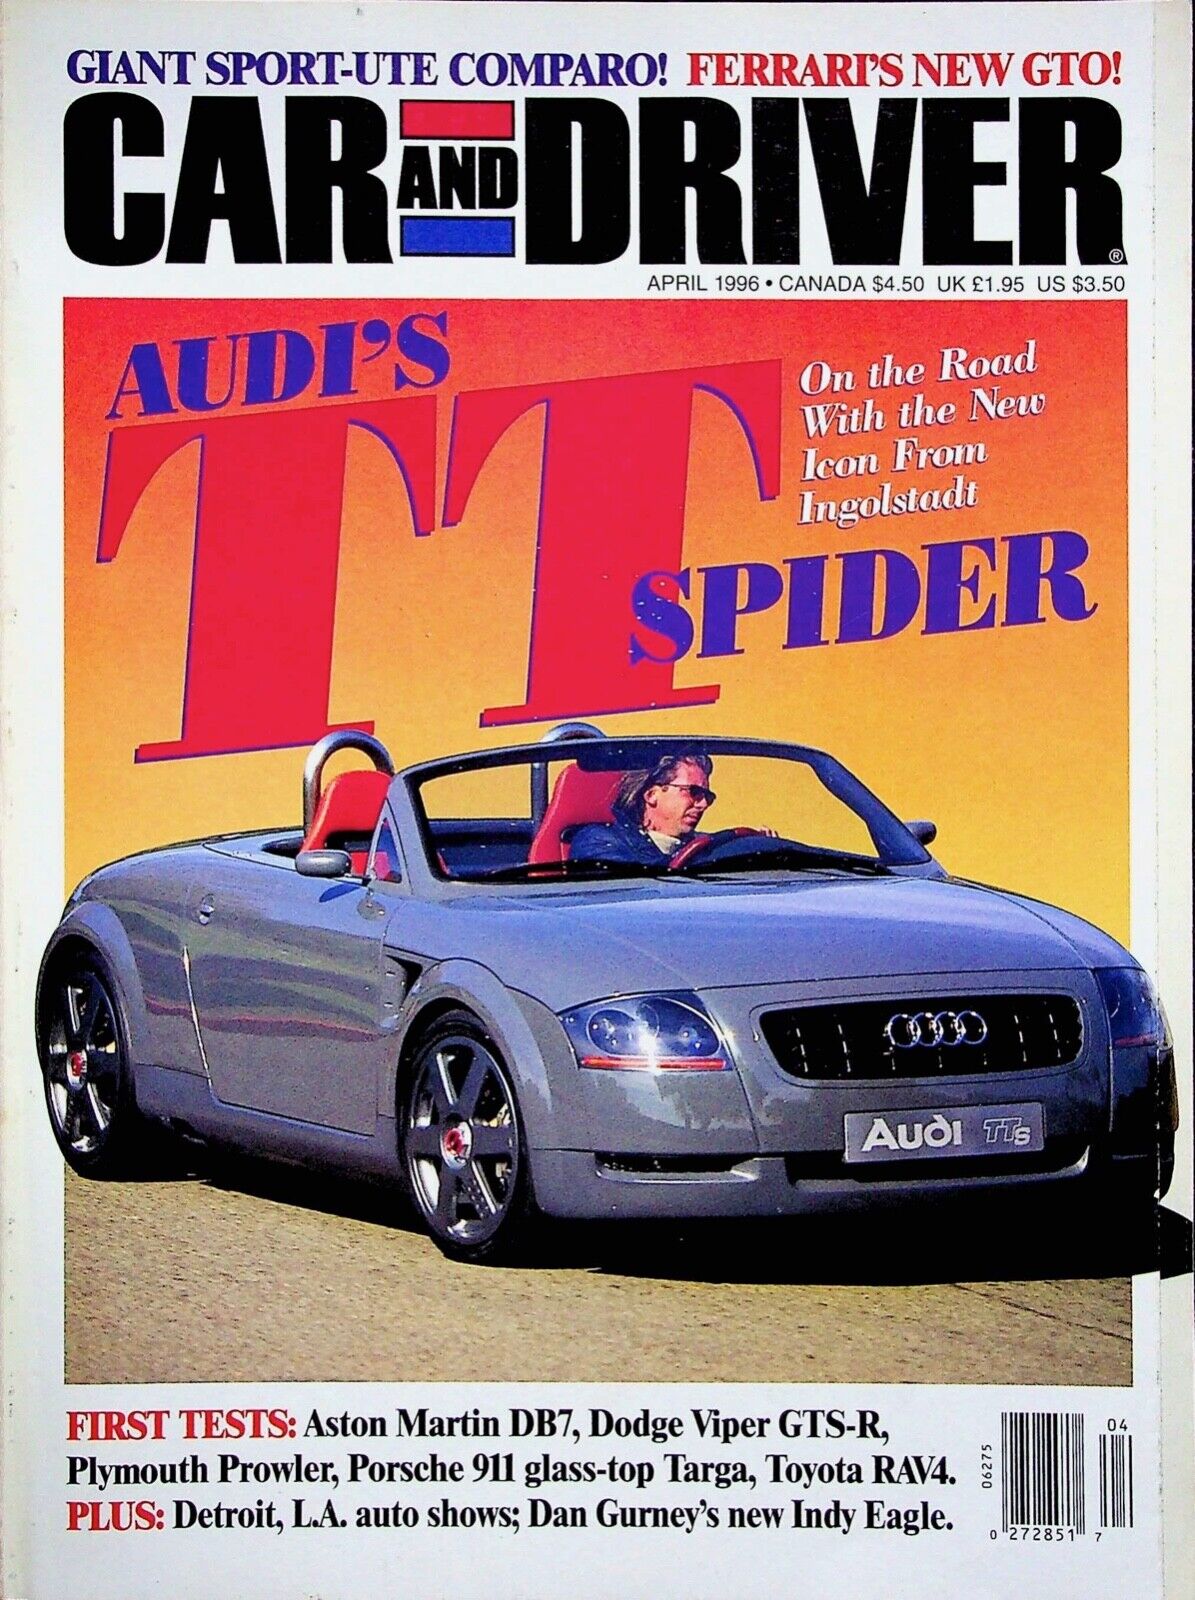 AUDI'S TT SPIDER  - CAR AND DRIVER MAGAZINE, APRIL 1996 